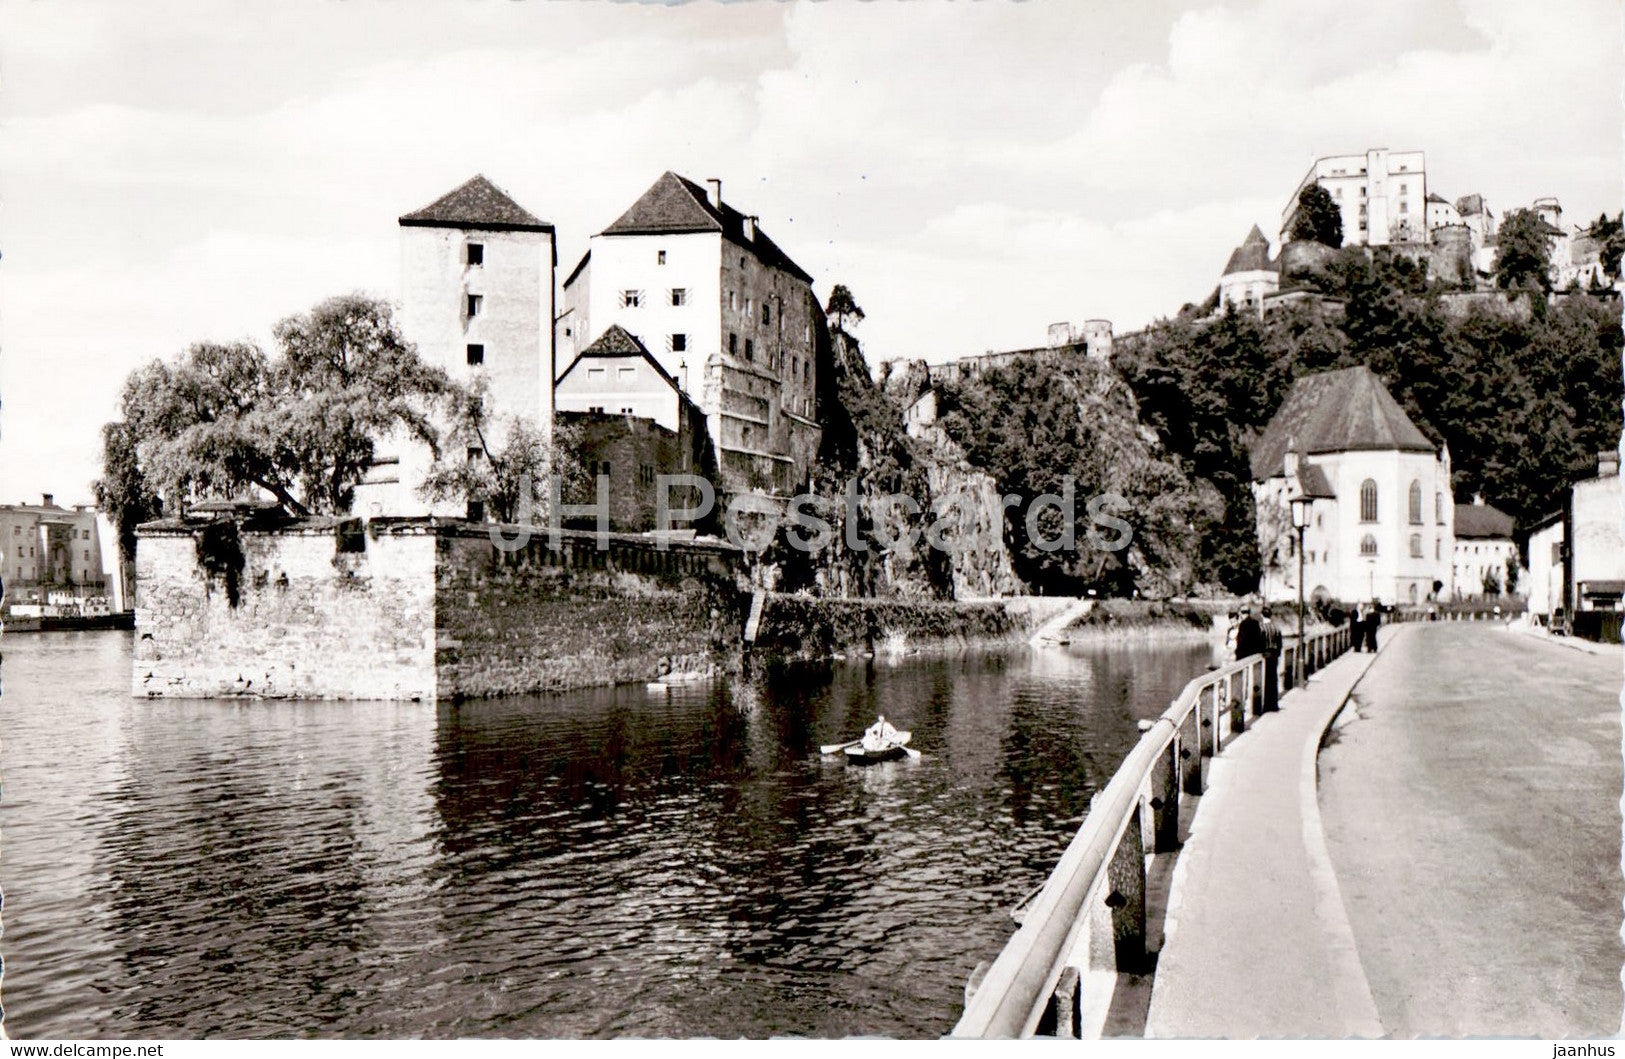 Passau an der Donau - Veste Oberhaus - Niederhaus und Salvatorkirche - old postcard - Germany - unused - JH Postcards